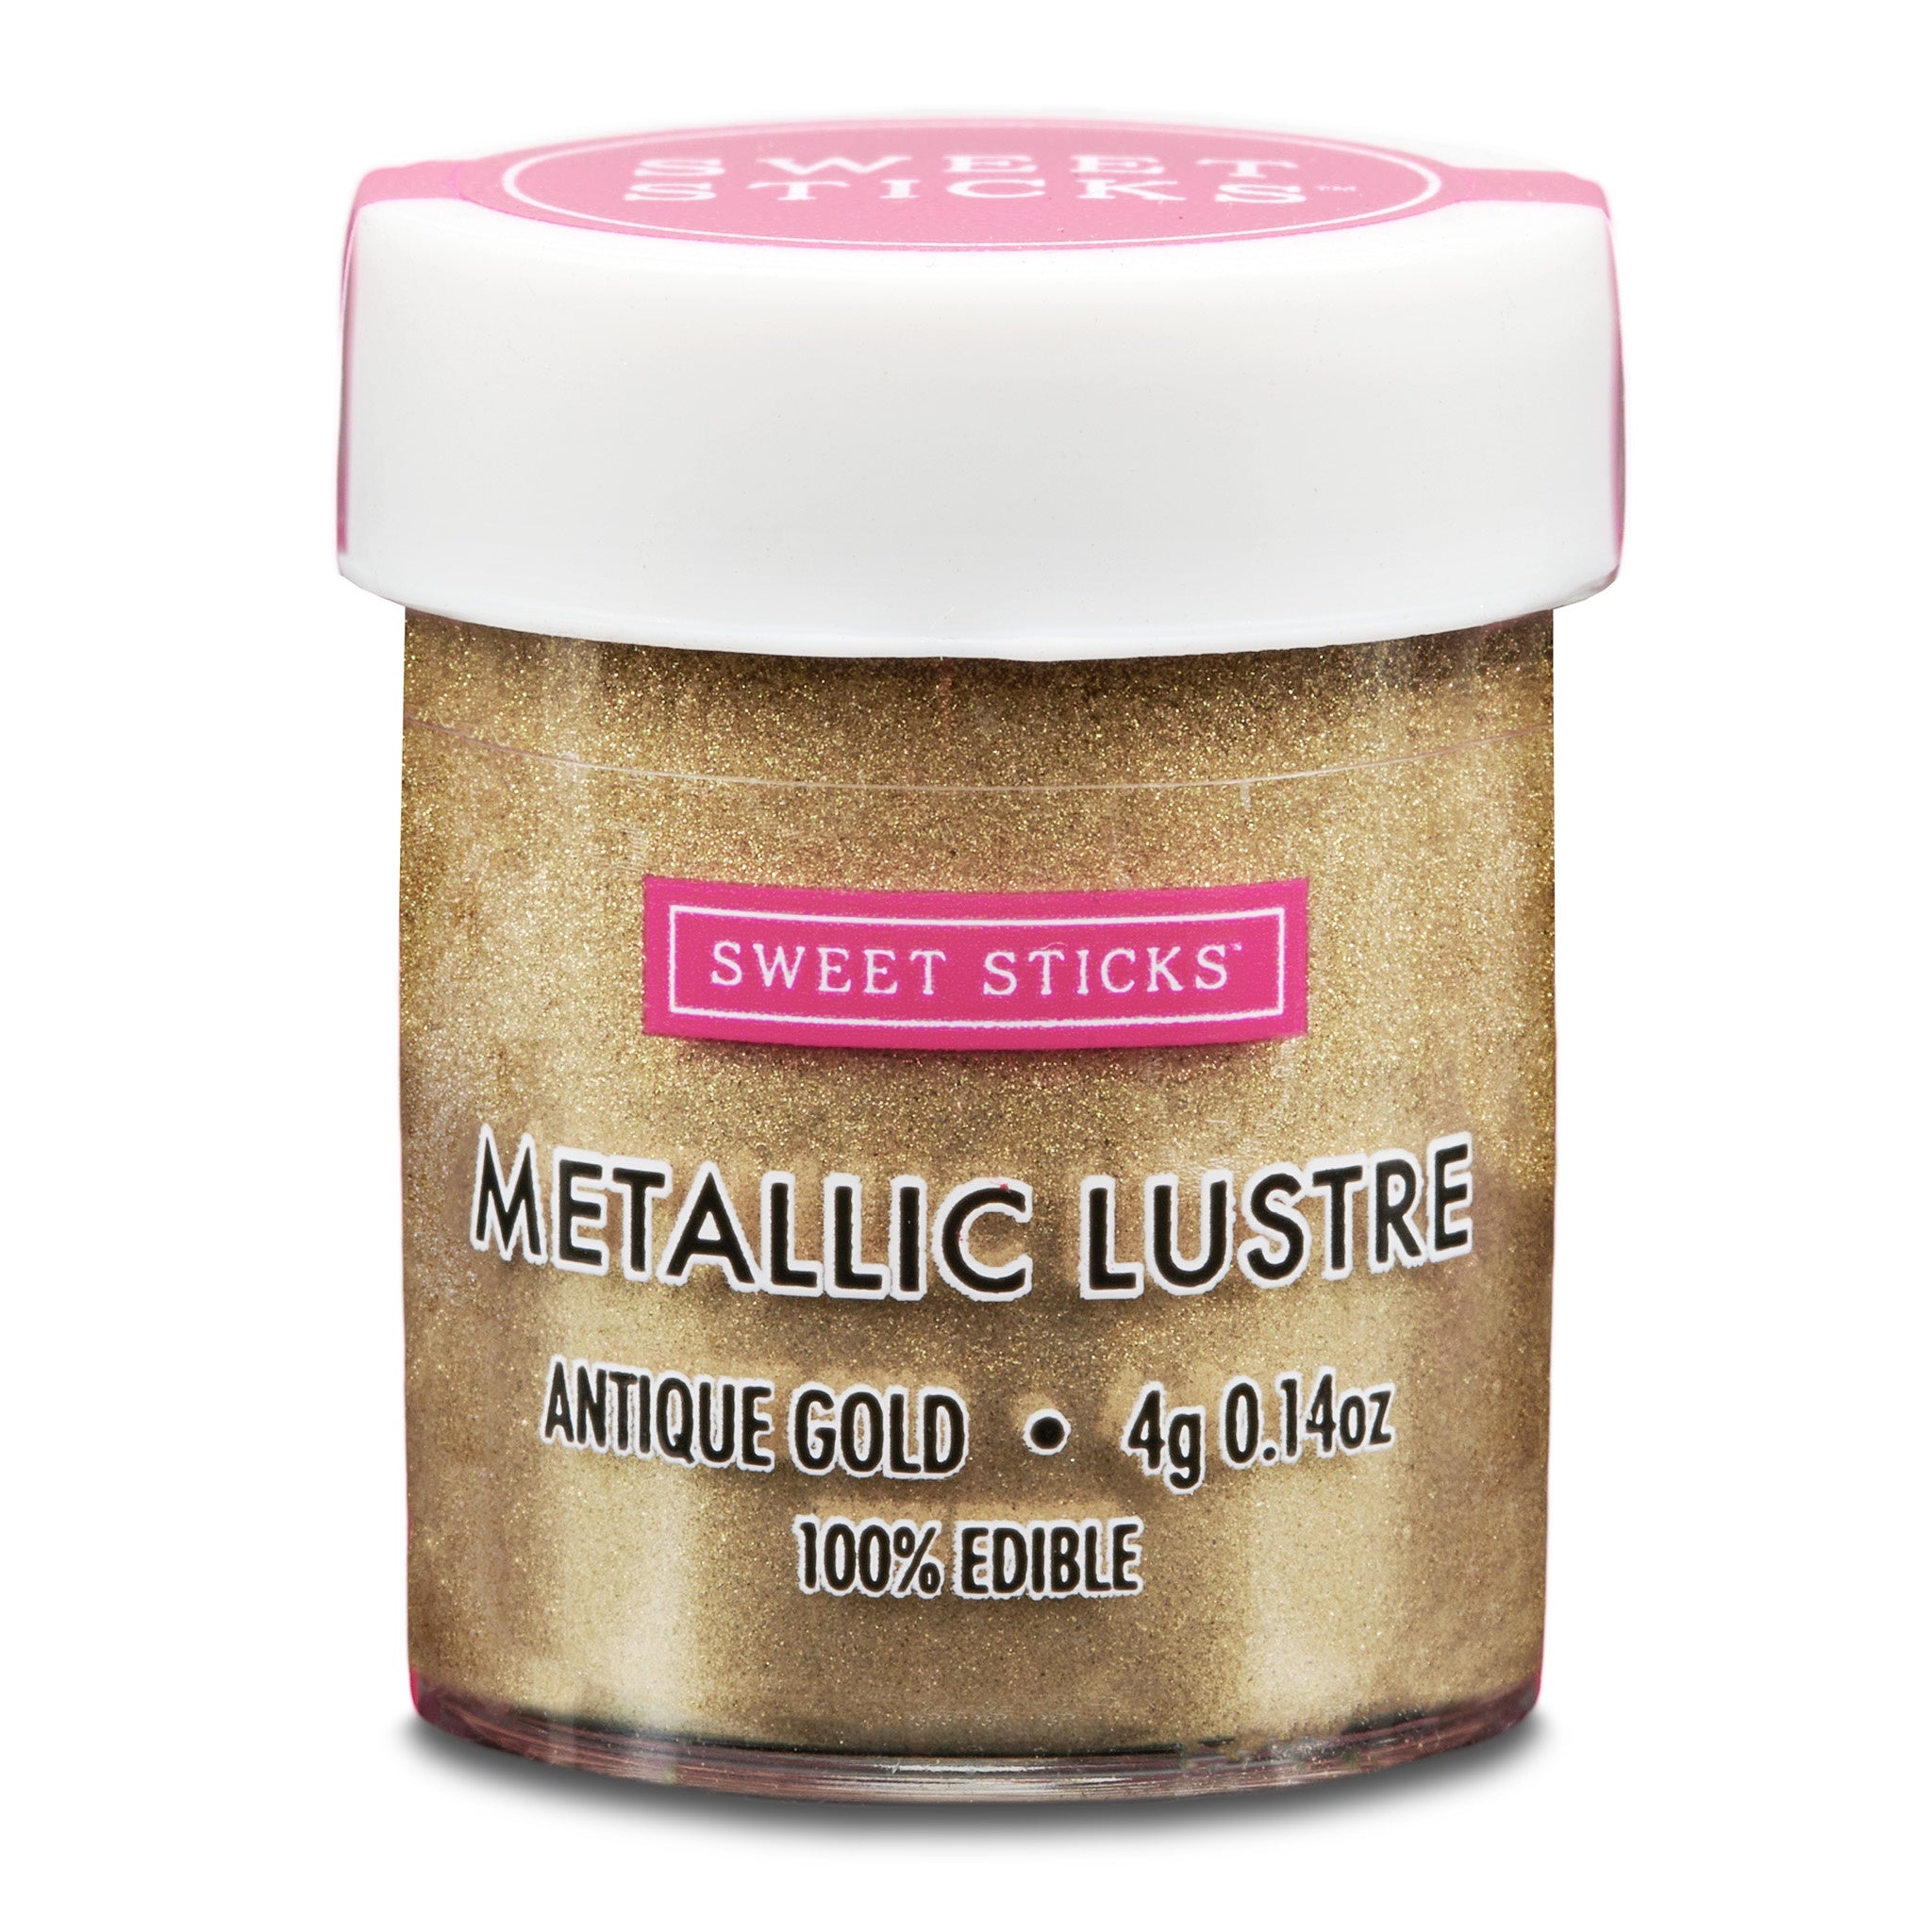 Sweet Sticks Metallic Lustre 4g - Antique Gold